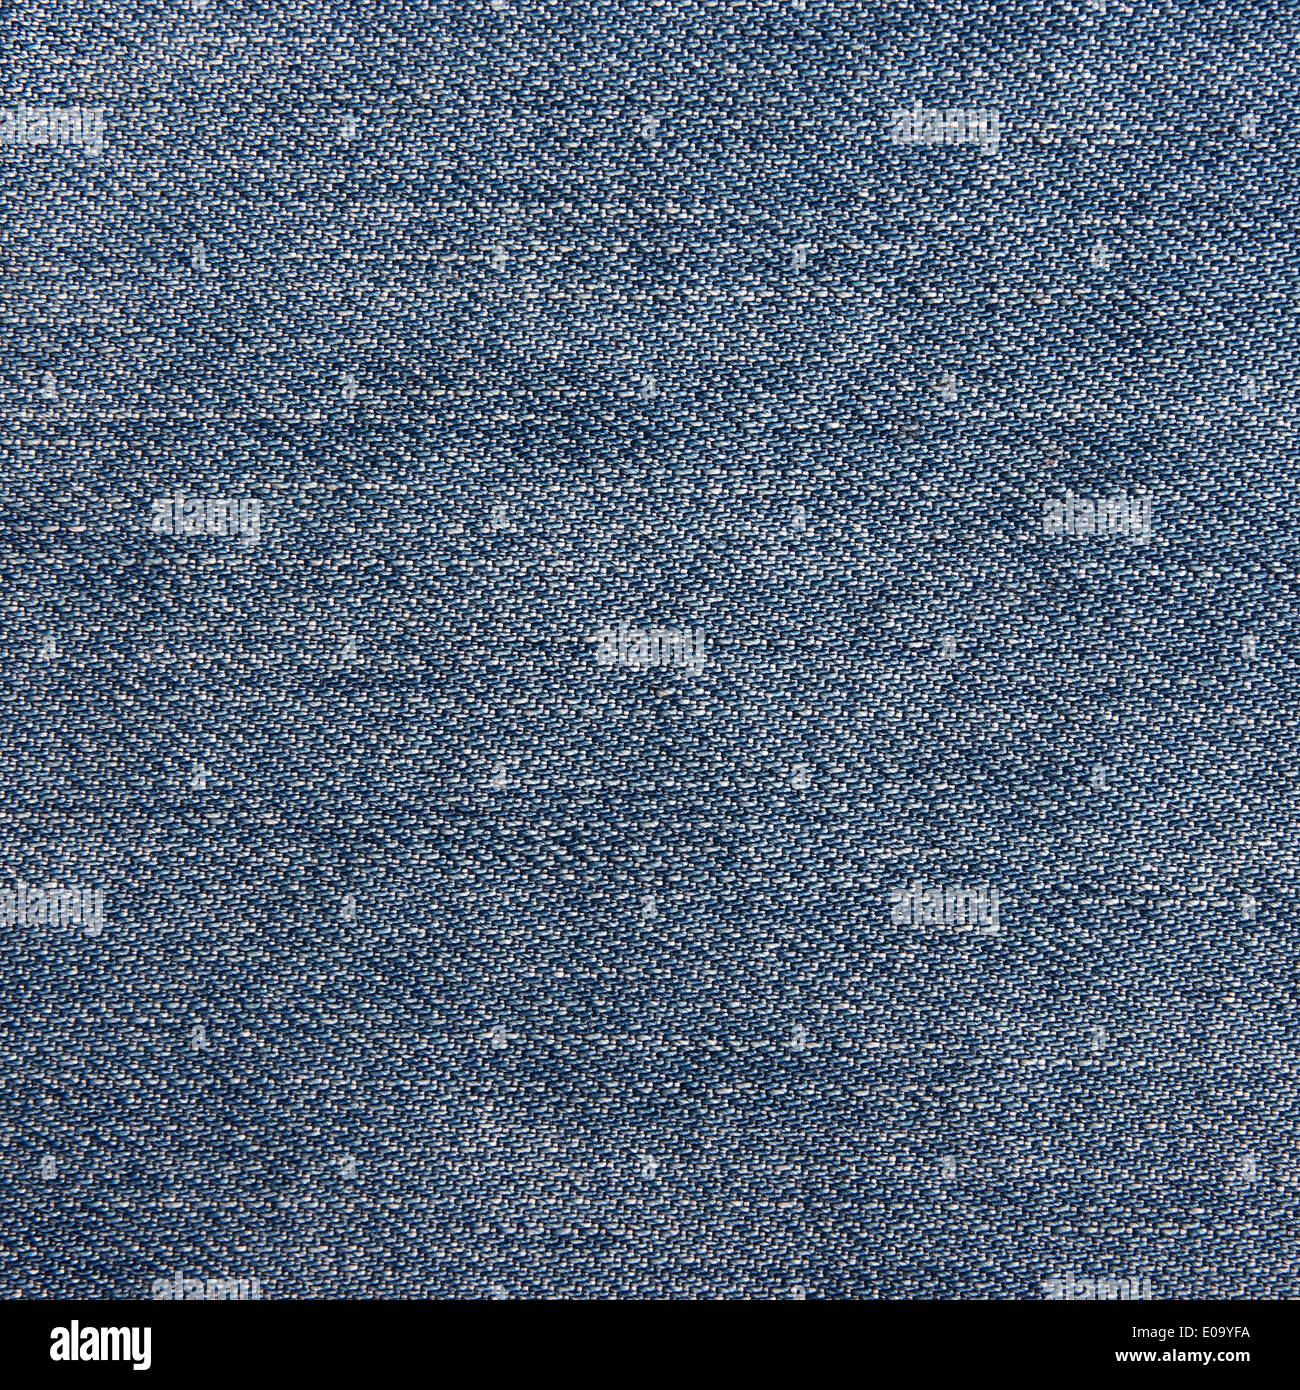 Blue denim jeans texture. Jeans background. Stock Photo